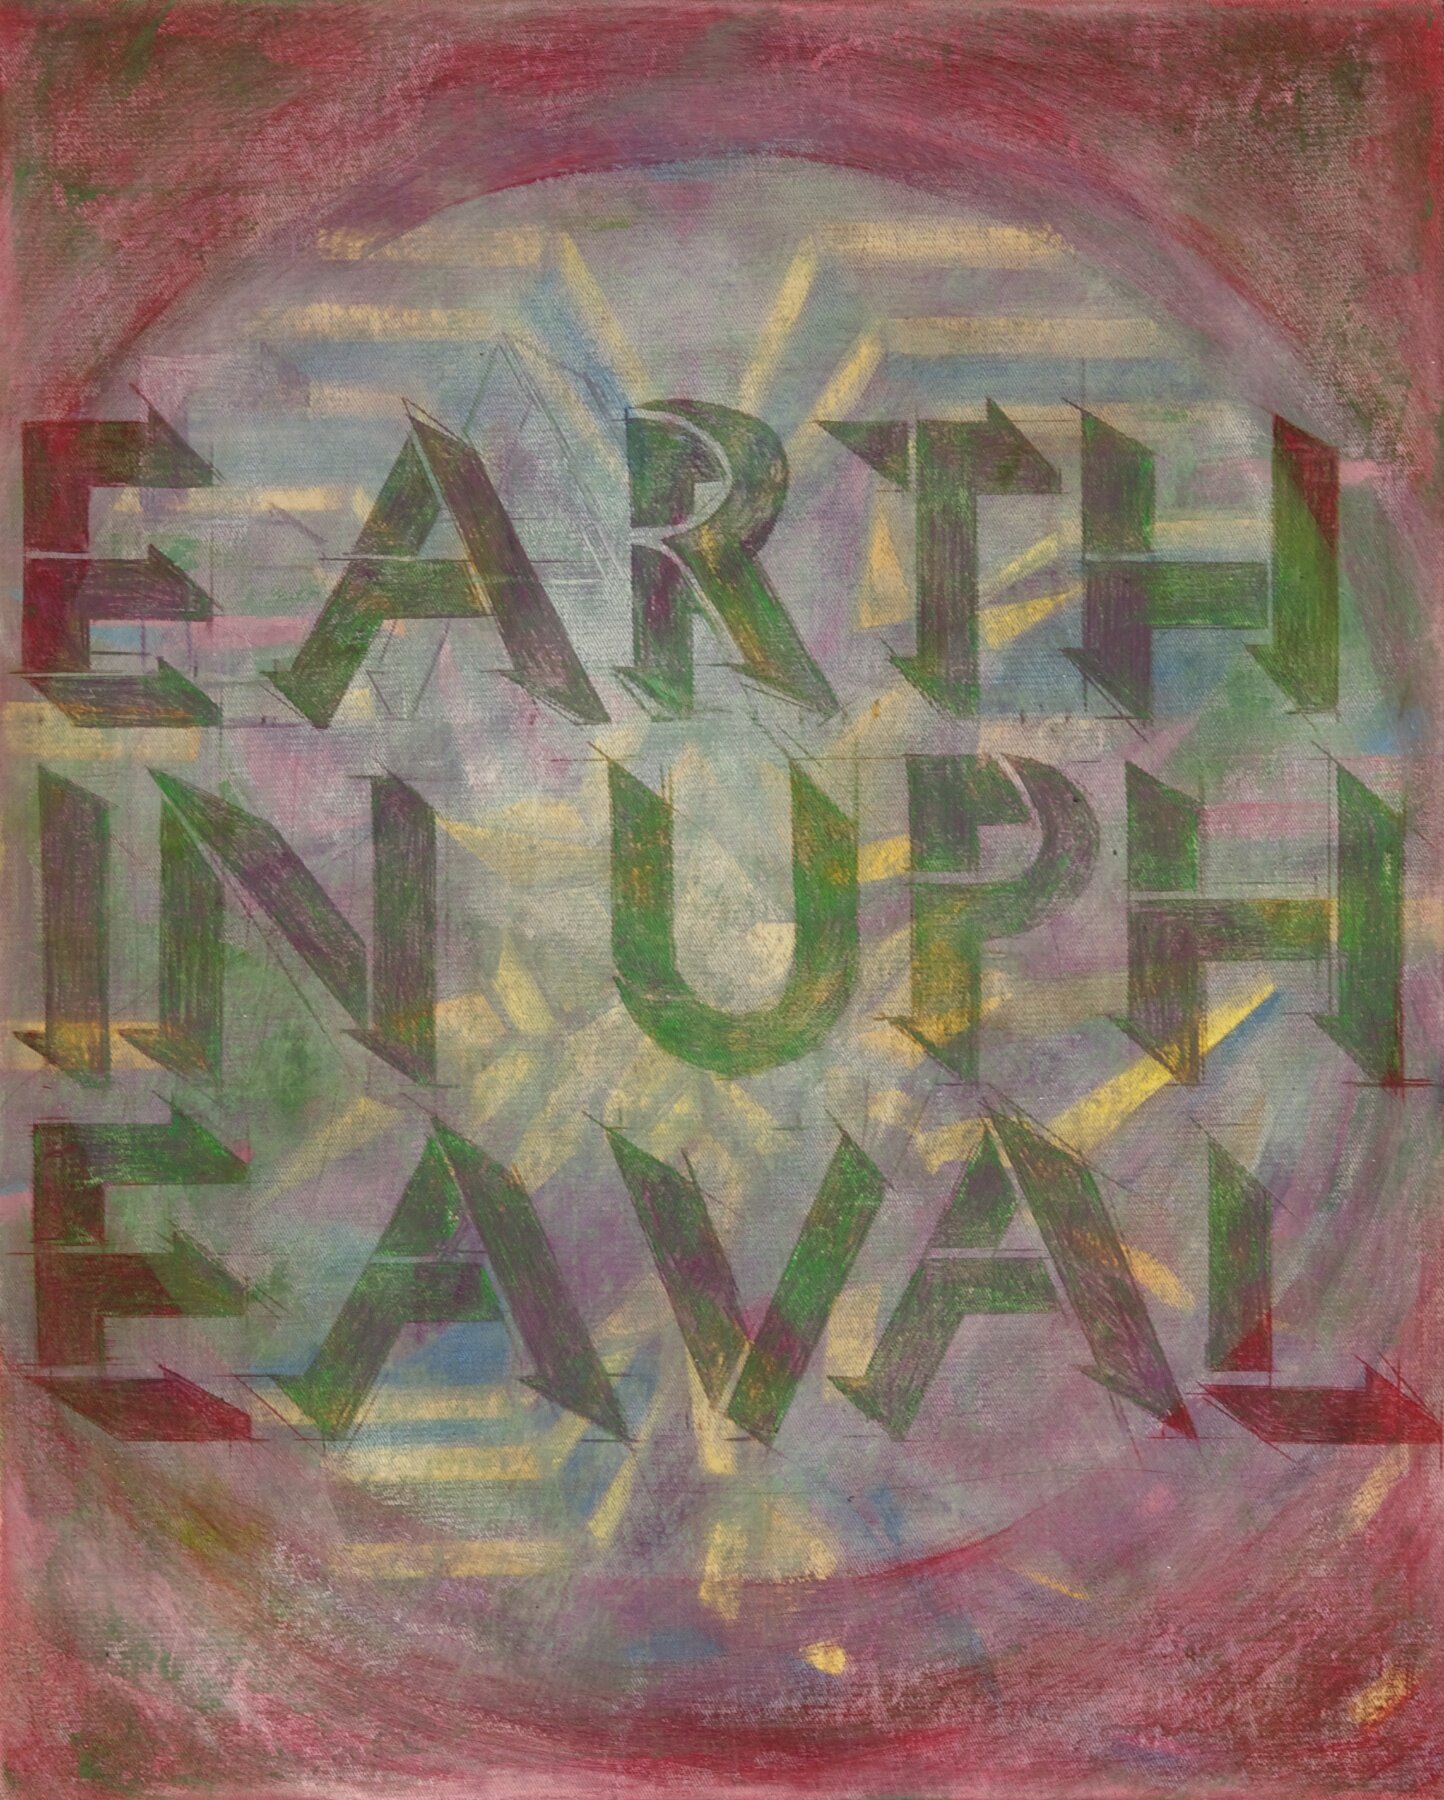 Earth and Upheaval